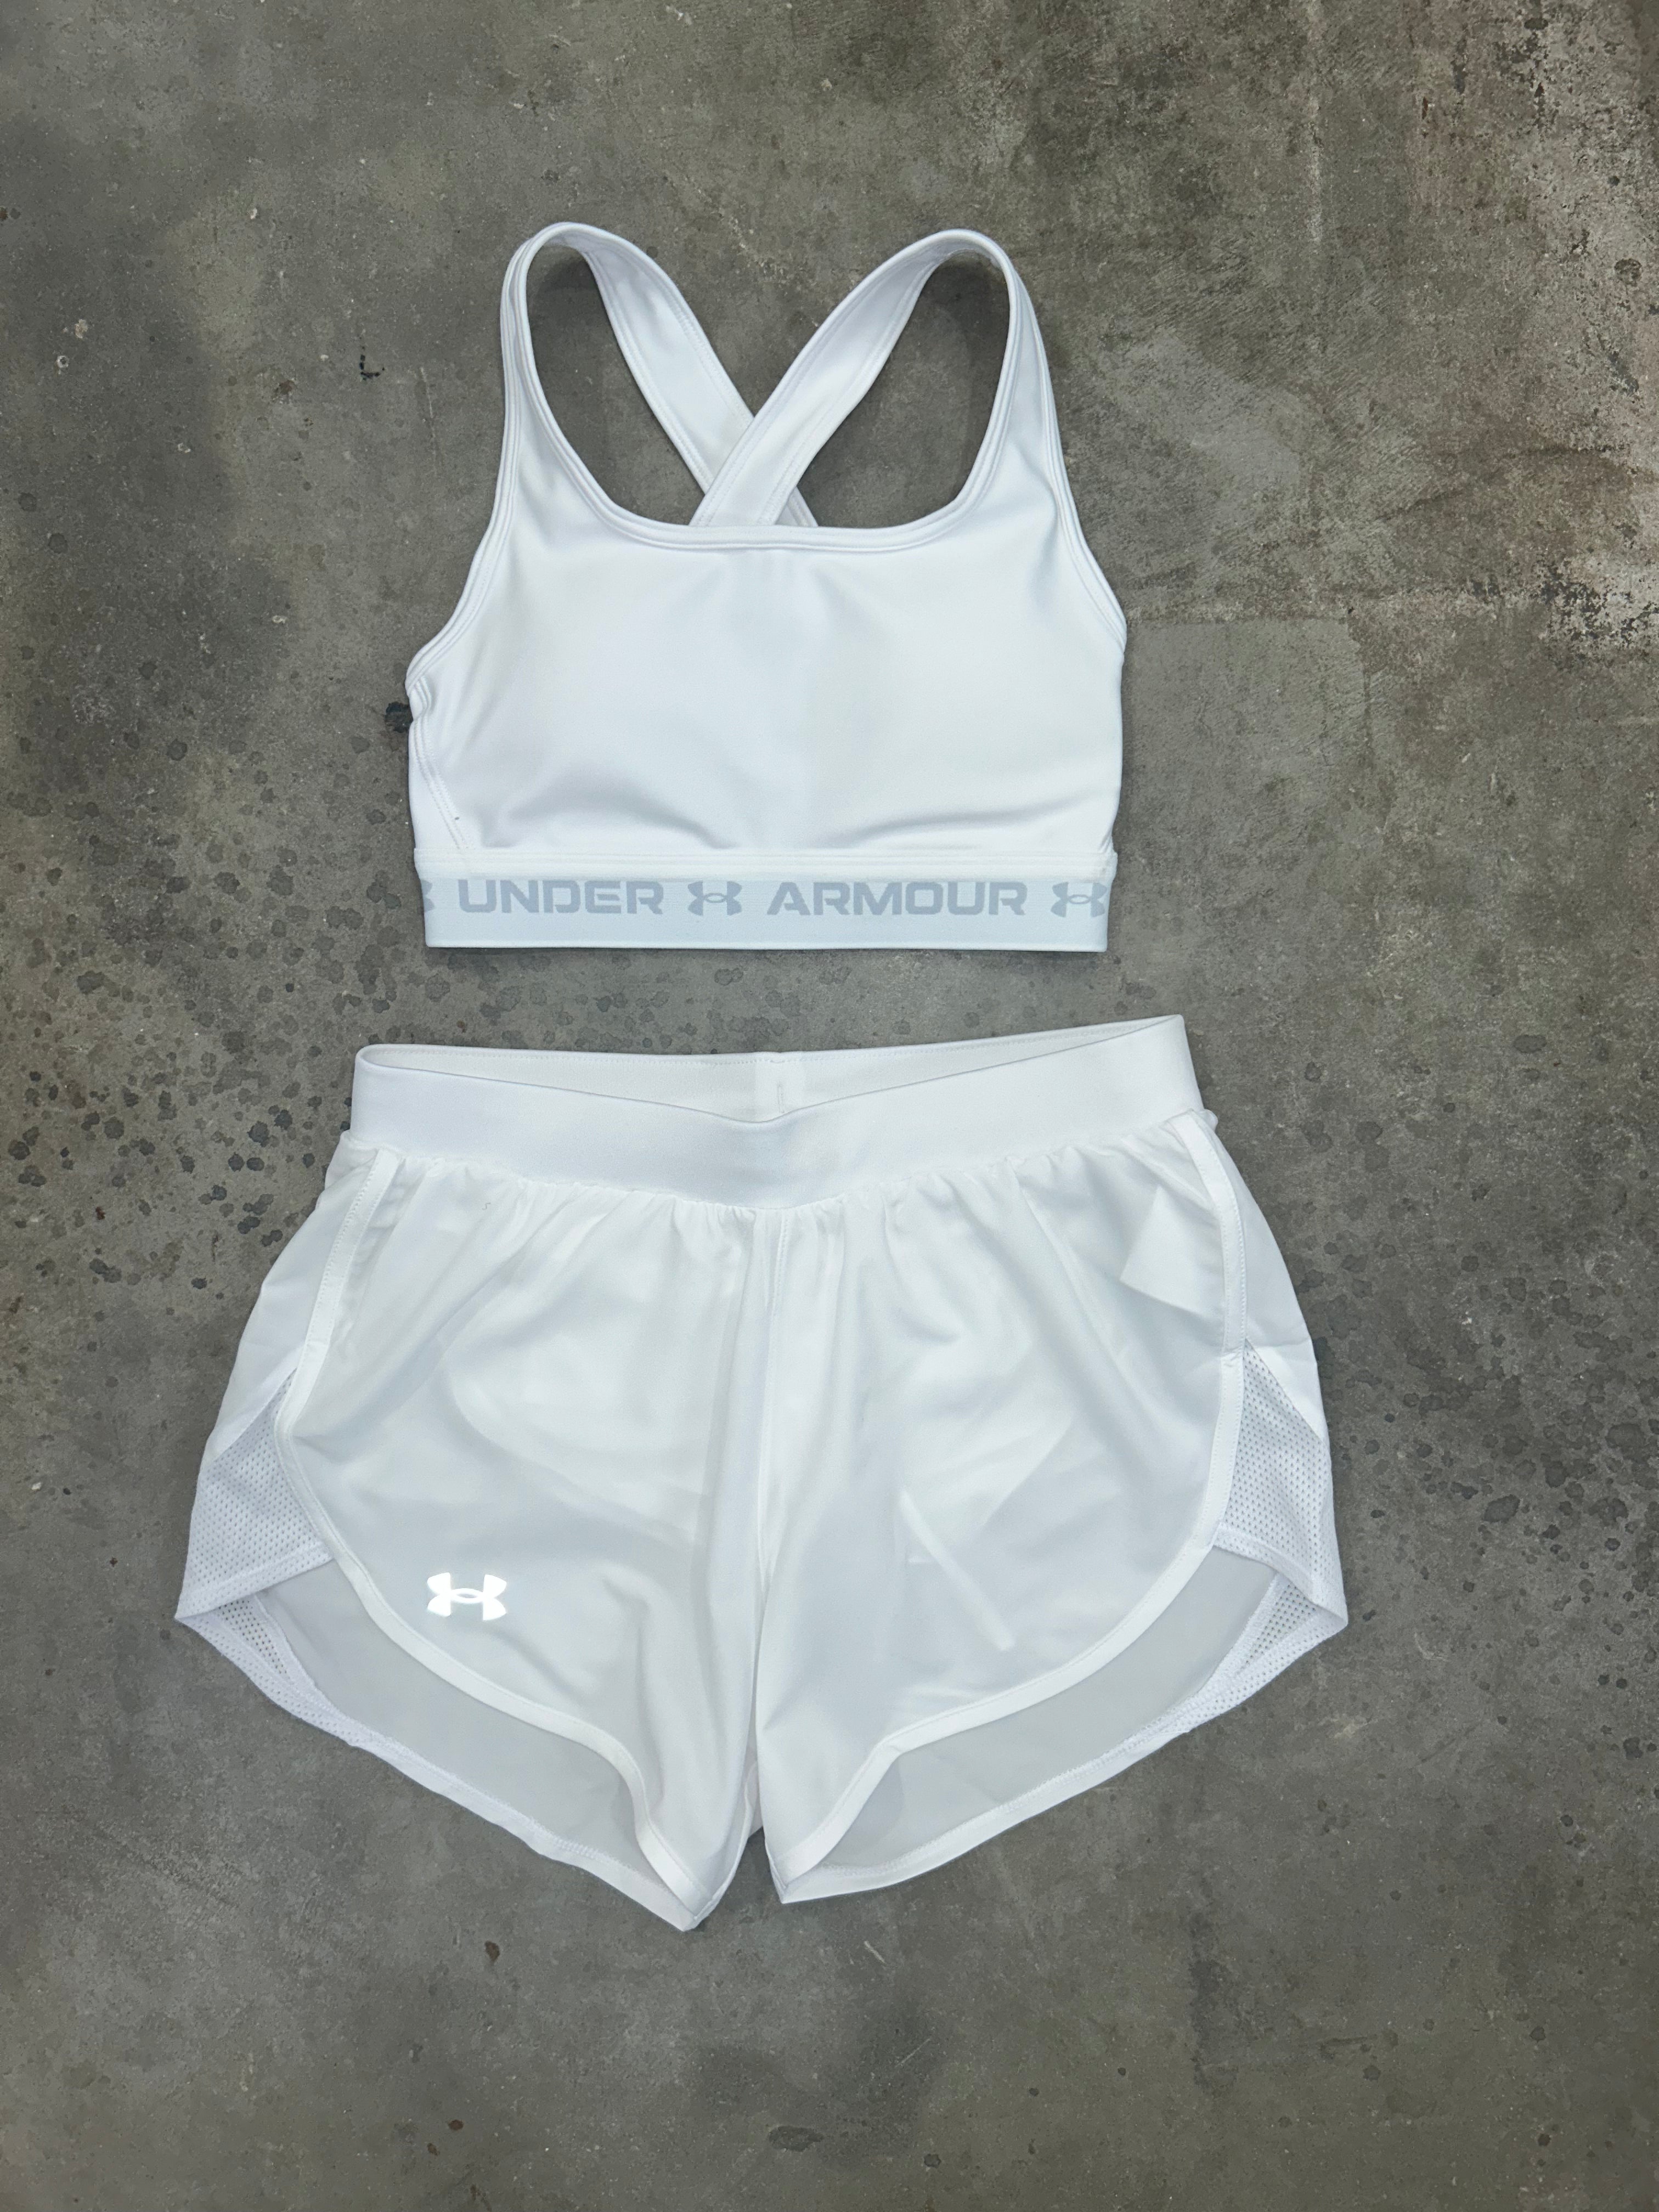 Under Armour White Set - Sports Bra / Shorts